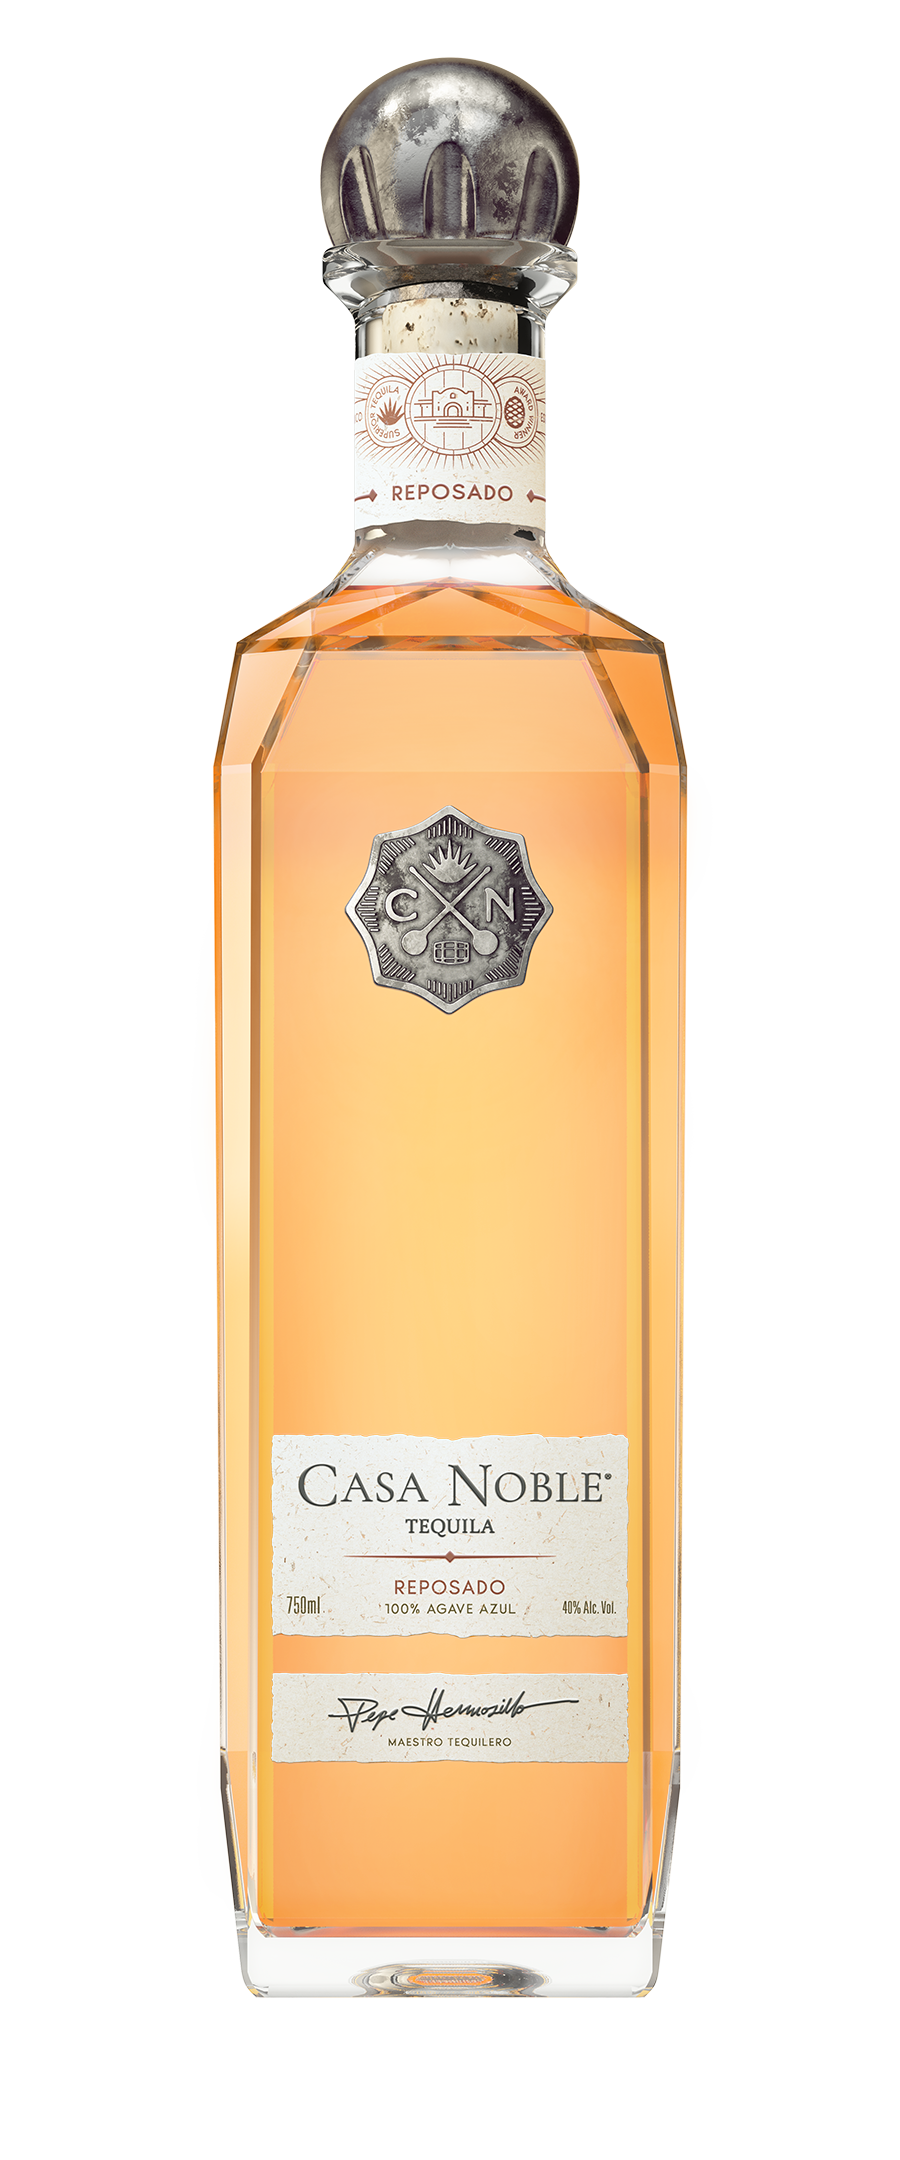 best tequila brands, Casa Noble bottle